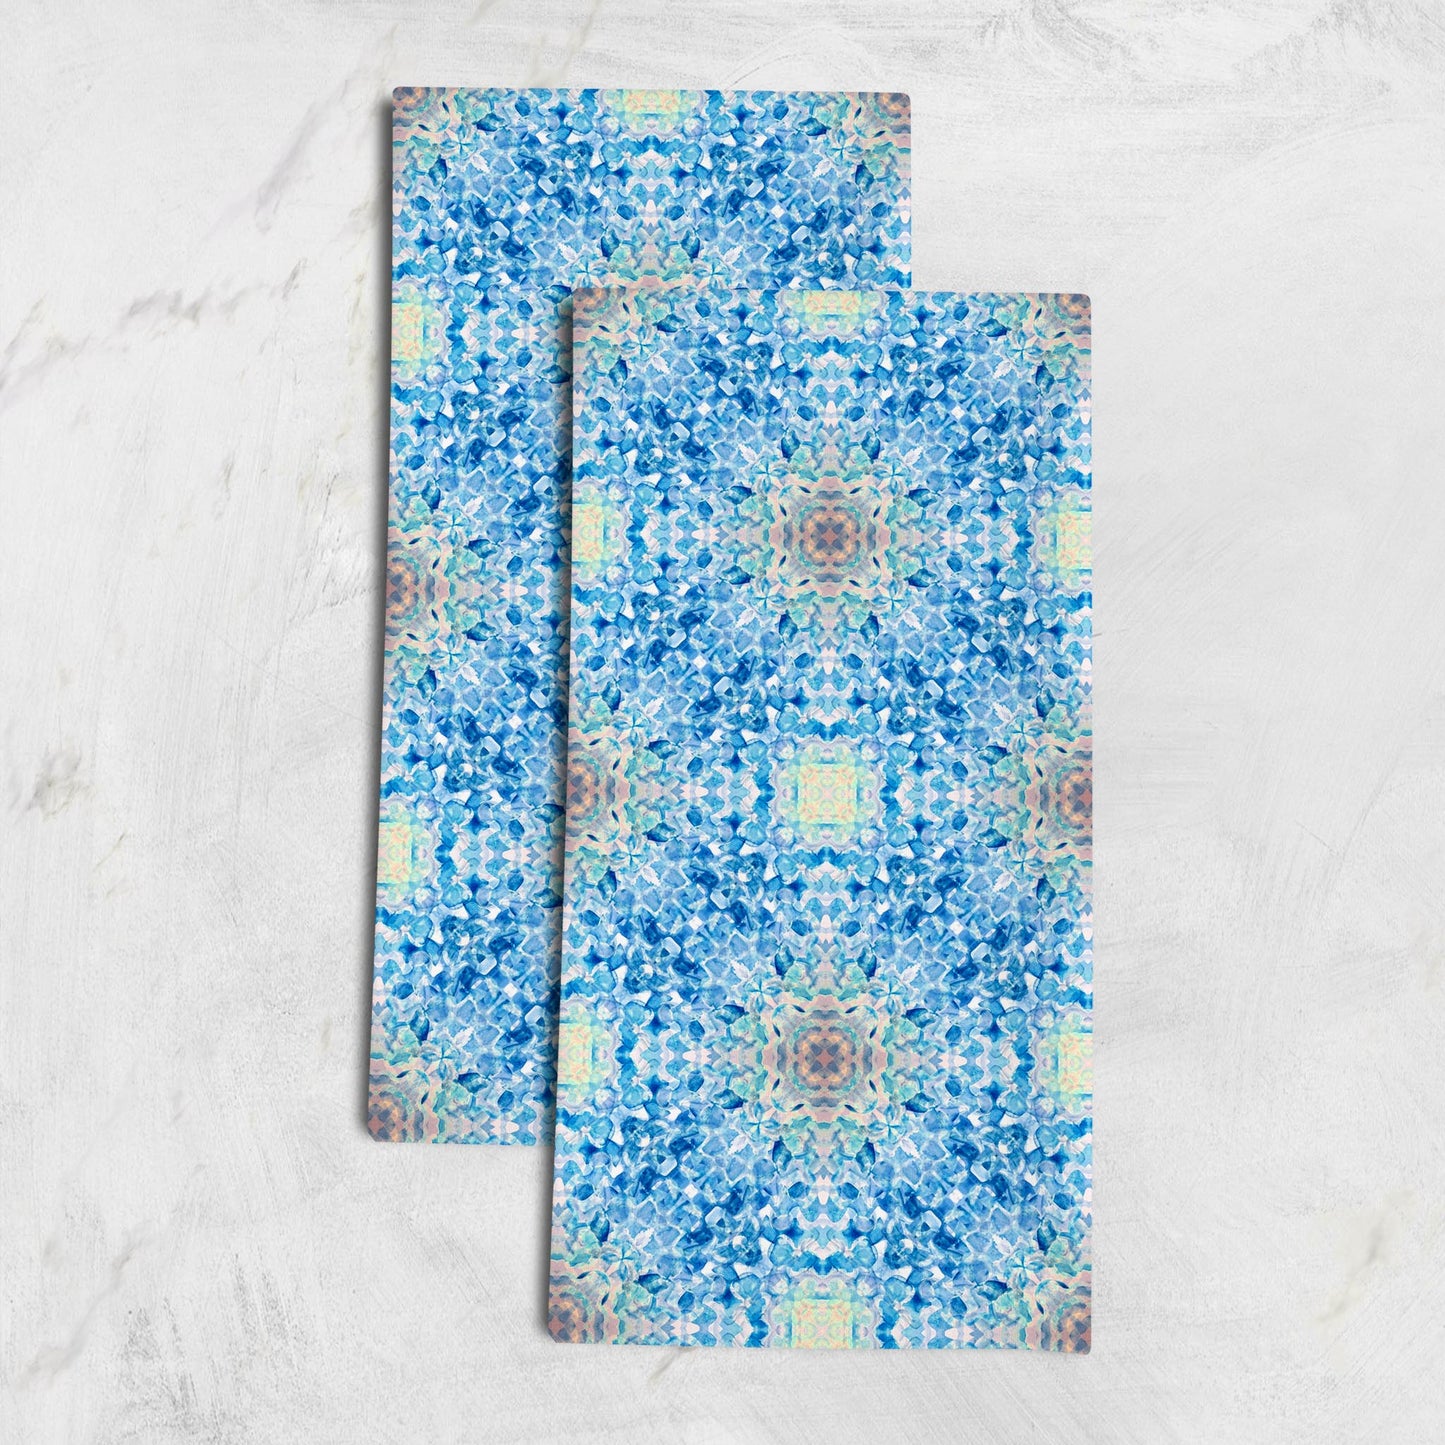 Catalina set of 2 organic cotton hemp tea towels abstract blue watercolor pattern